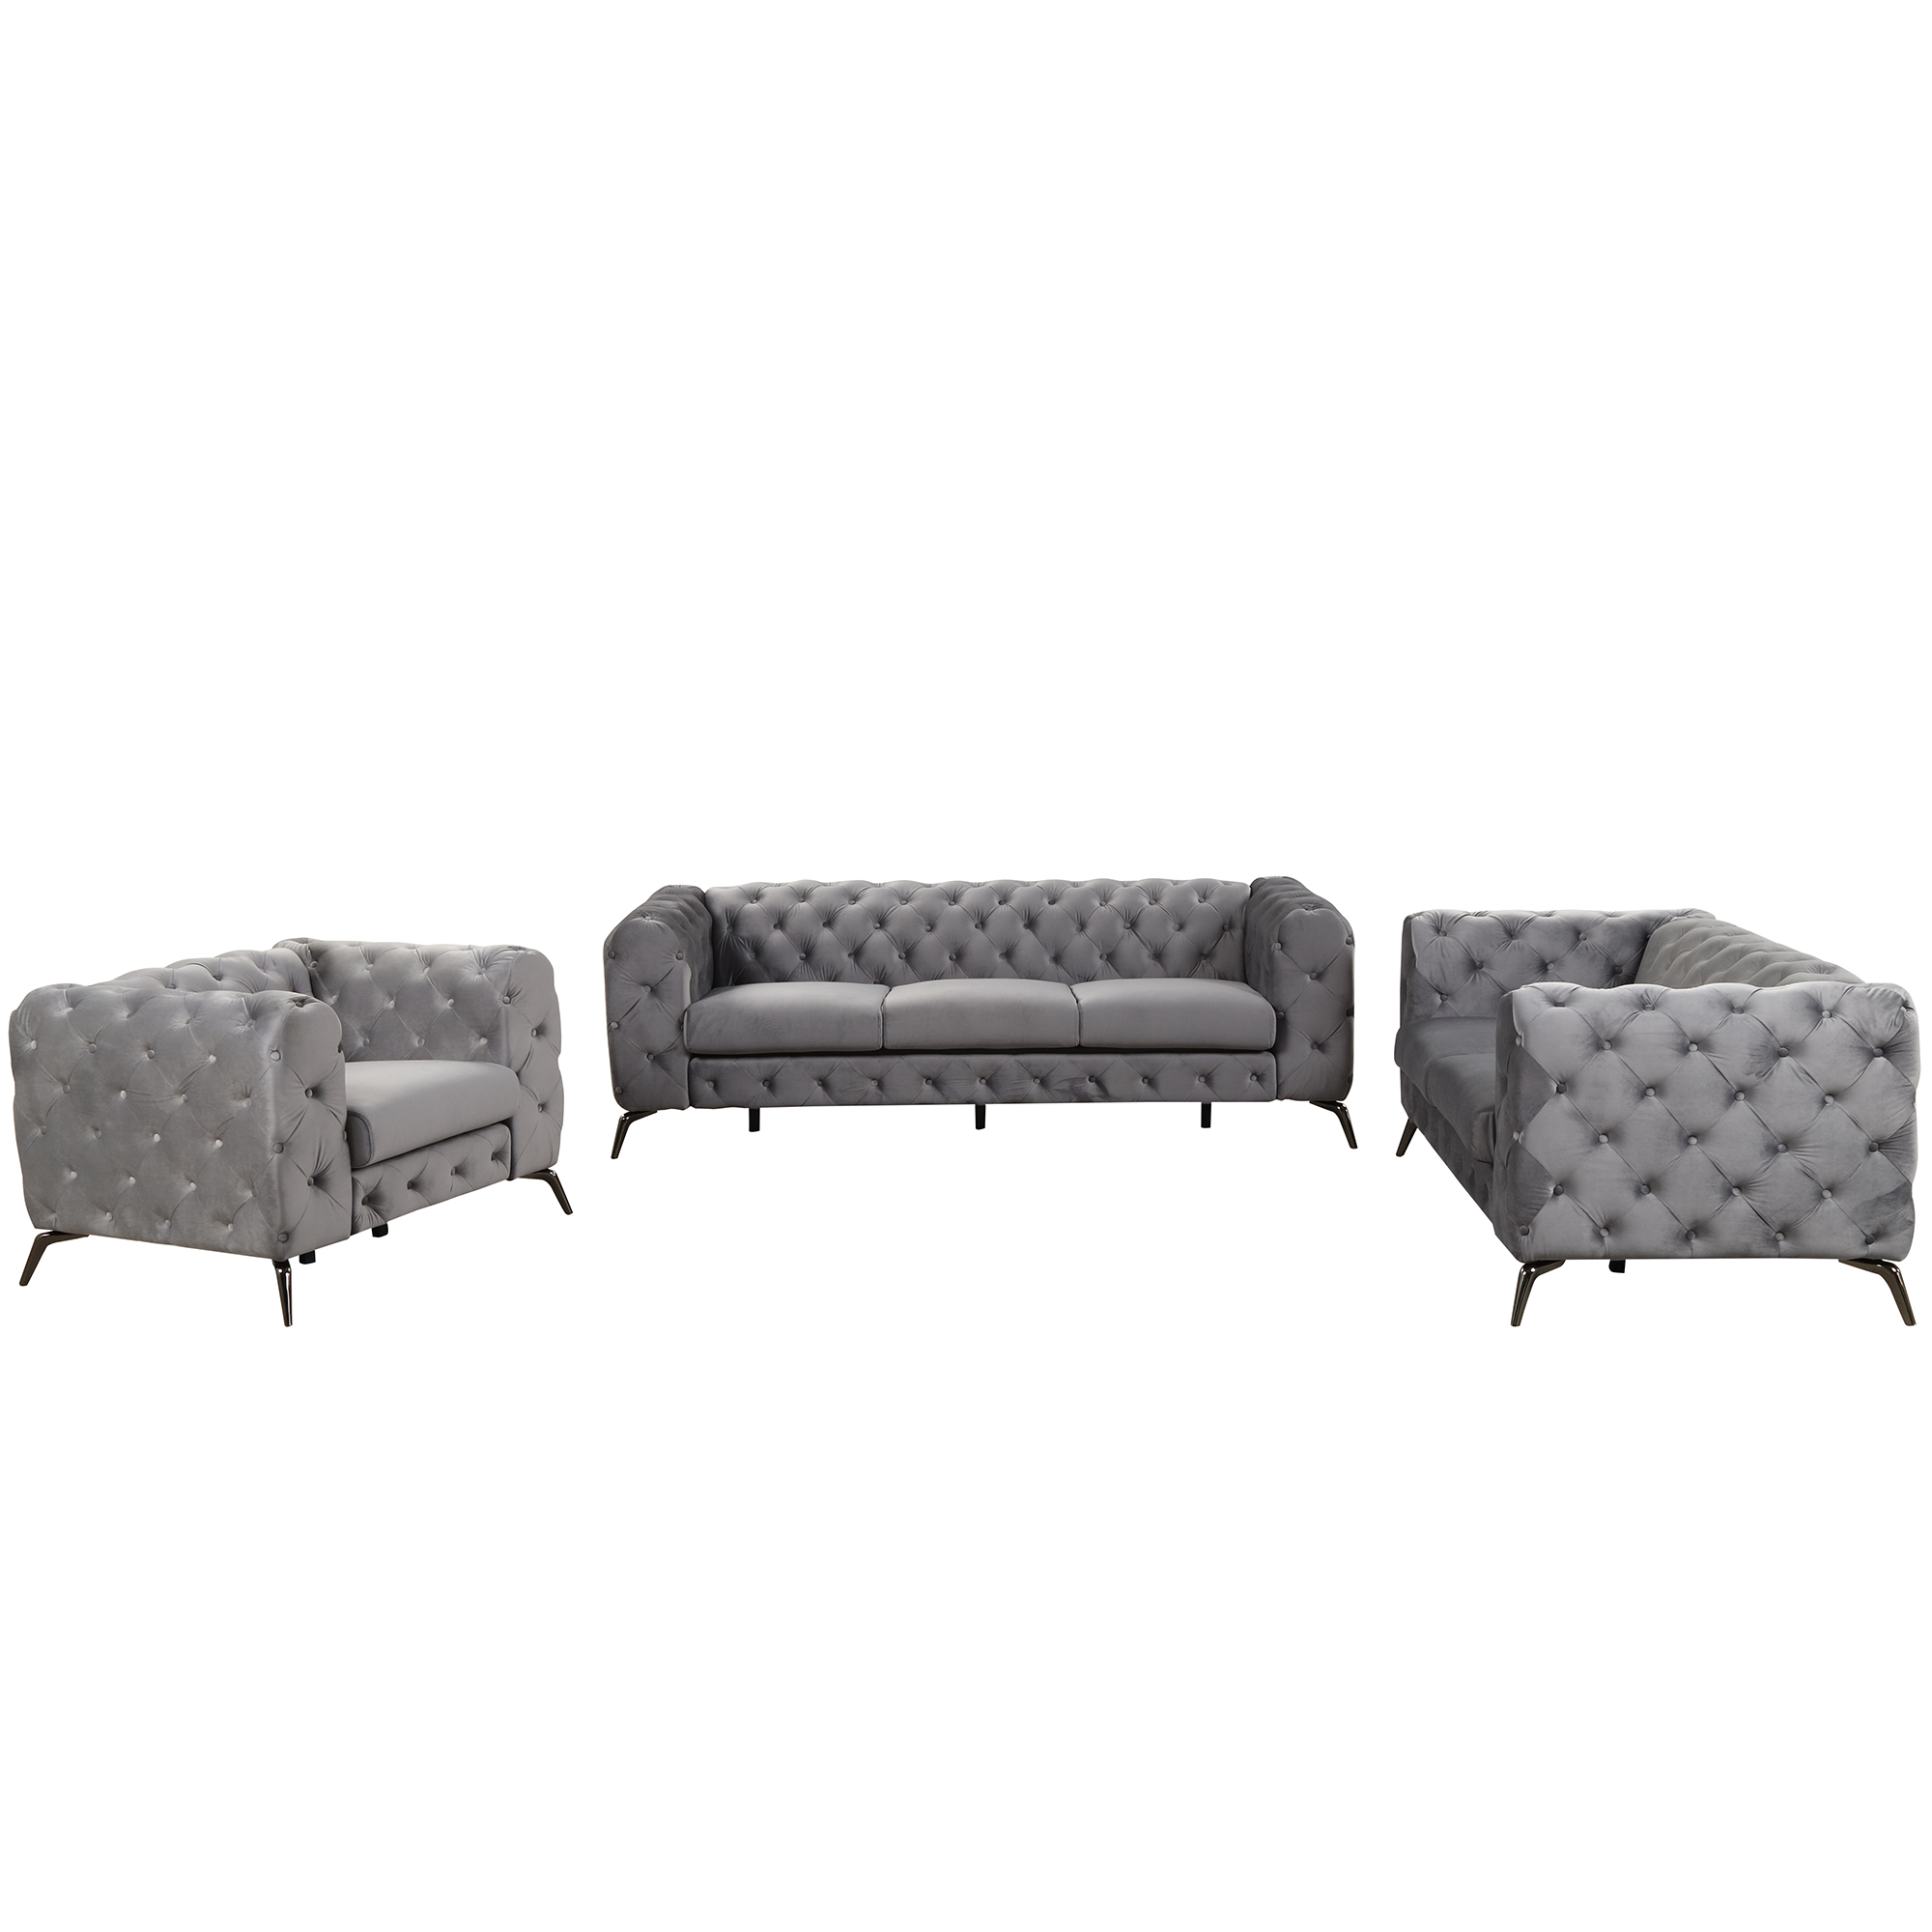 Modern 3-Piece Sofa Sets With Sturdy Metal Legs - SG000600AAE